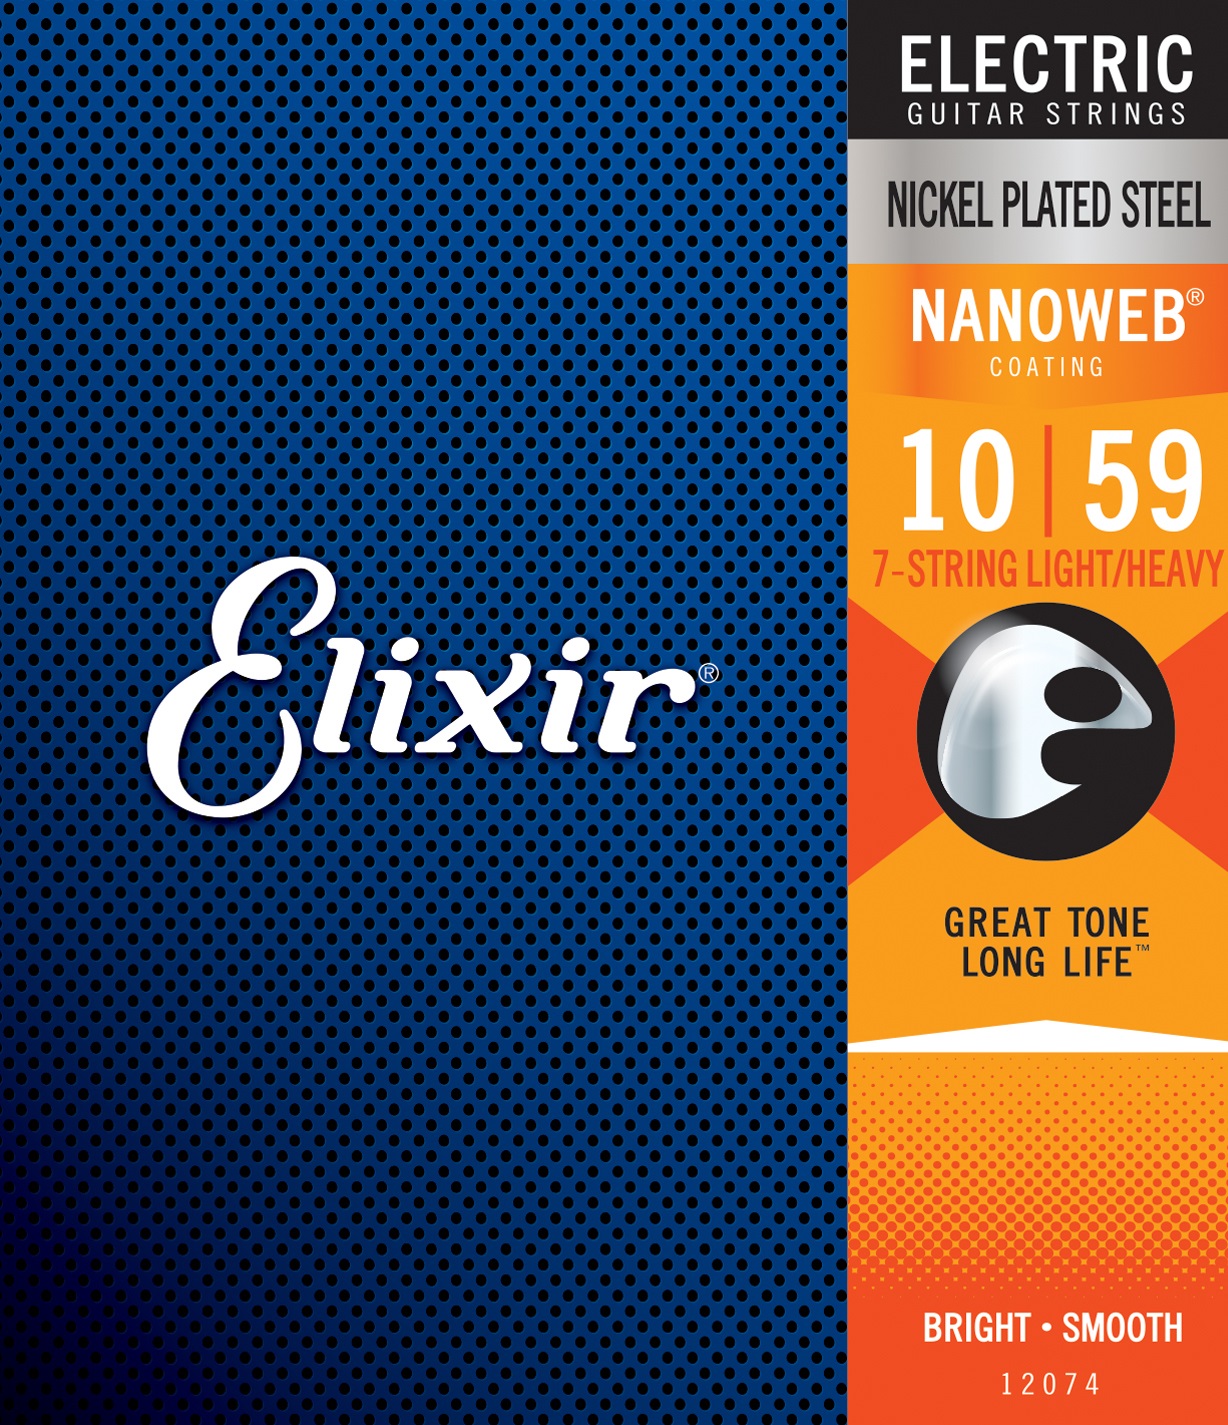 Elixir Nanoweb 7-String Light/Heavy